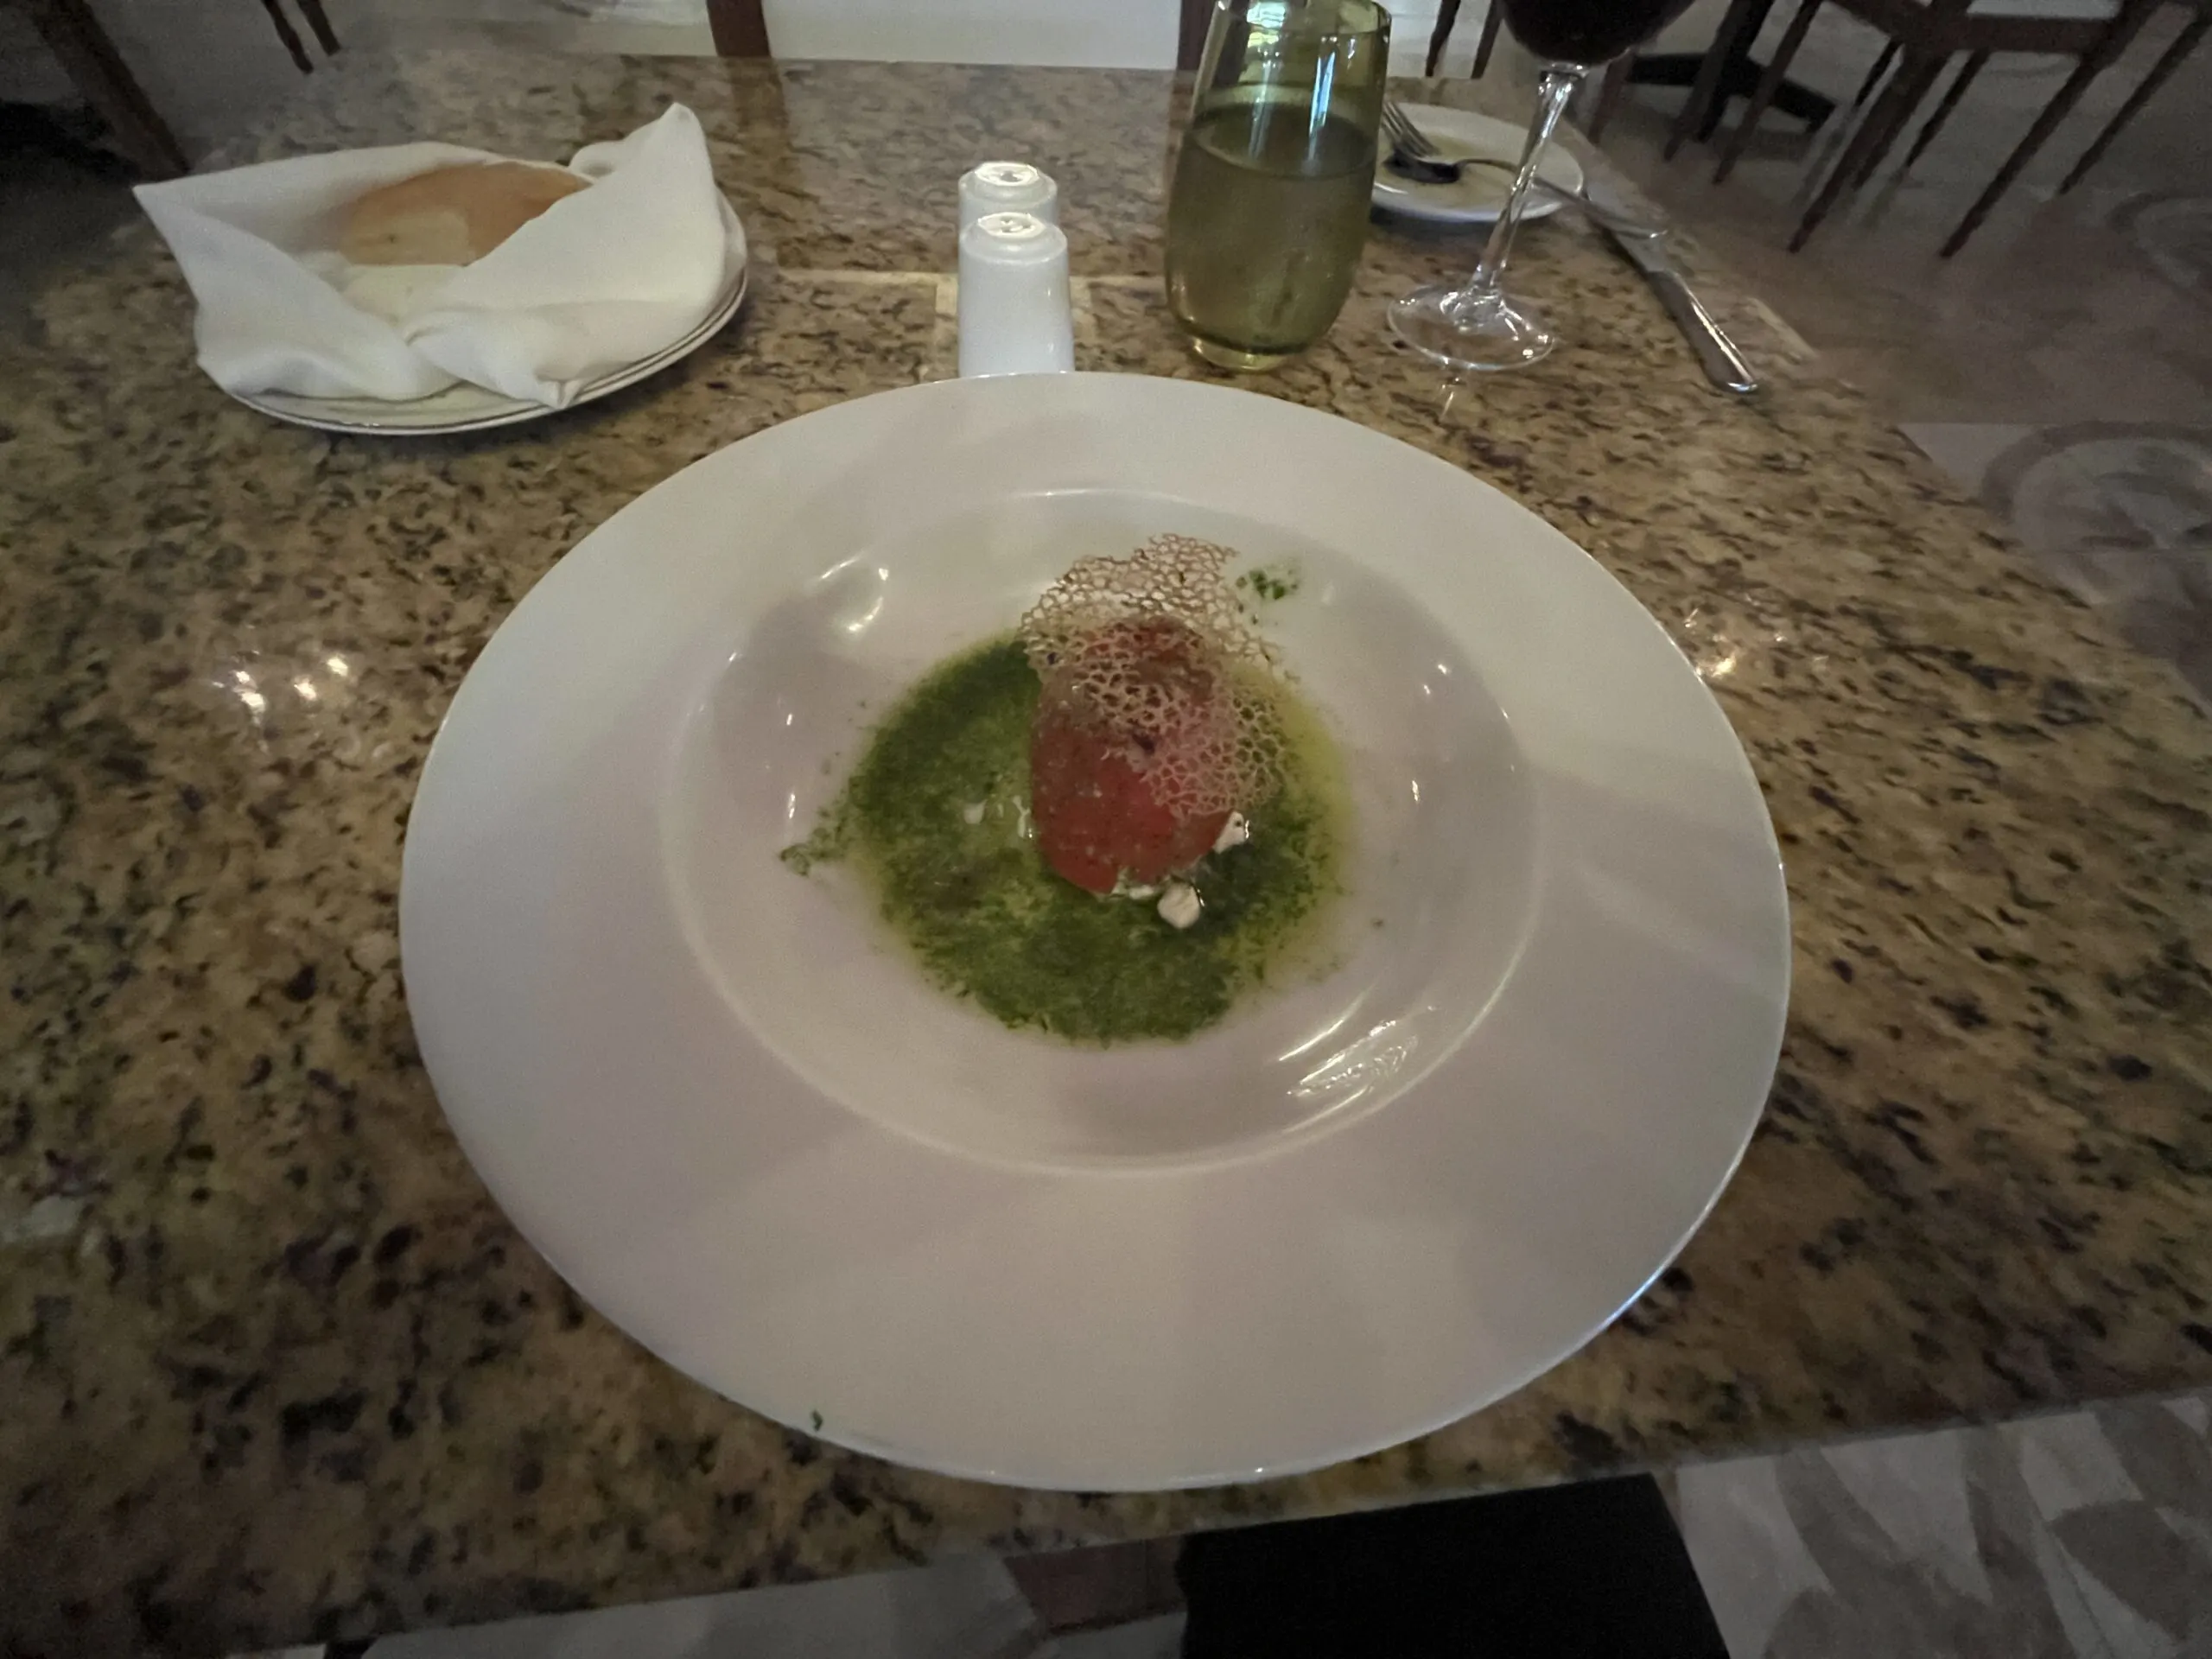 The shrimp ravioli at Sensira's Italian restaurant was delicious